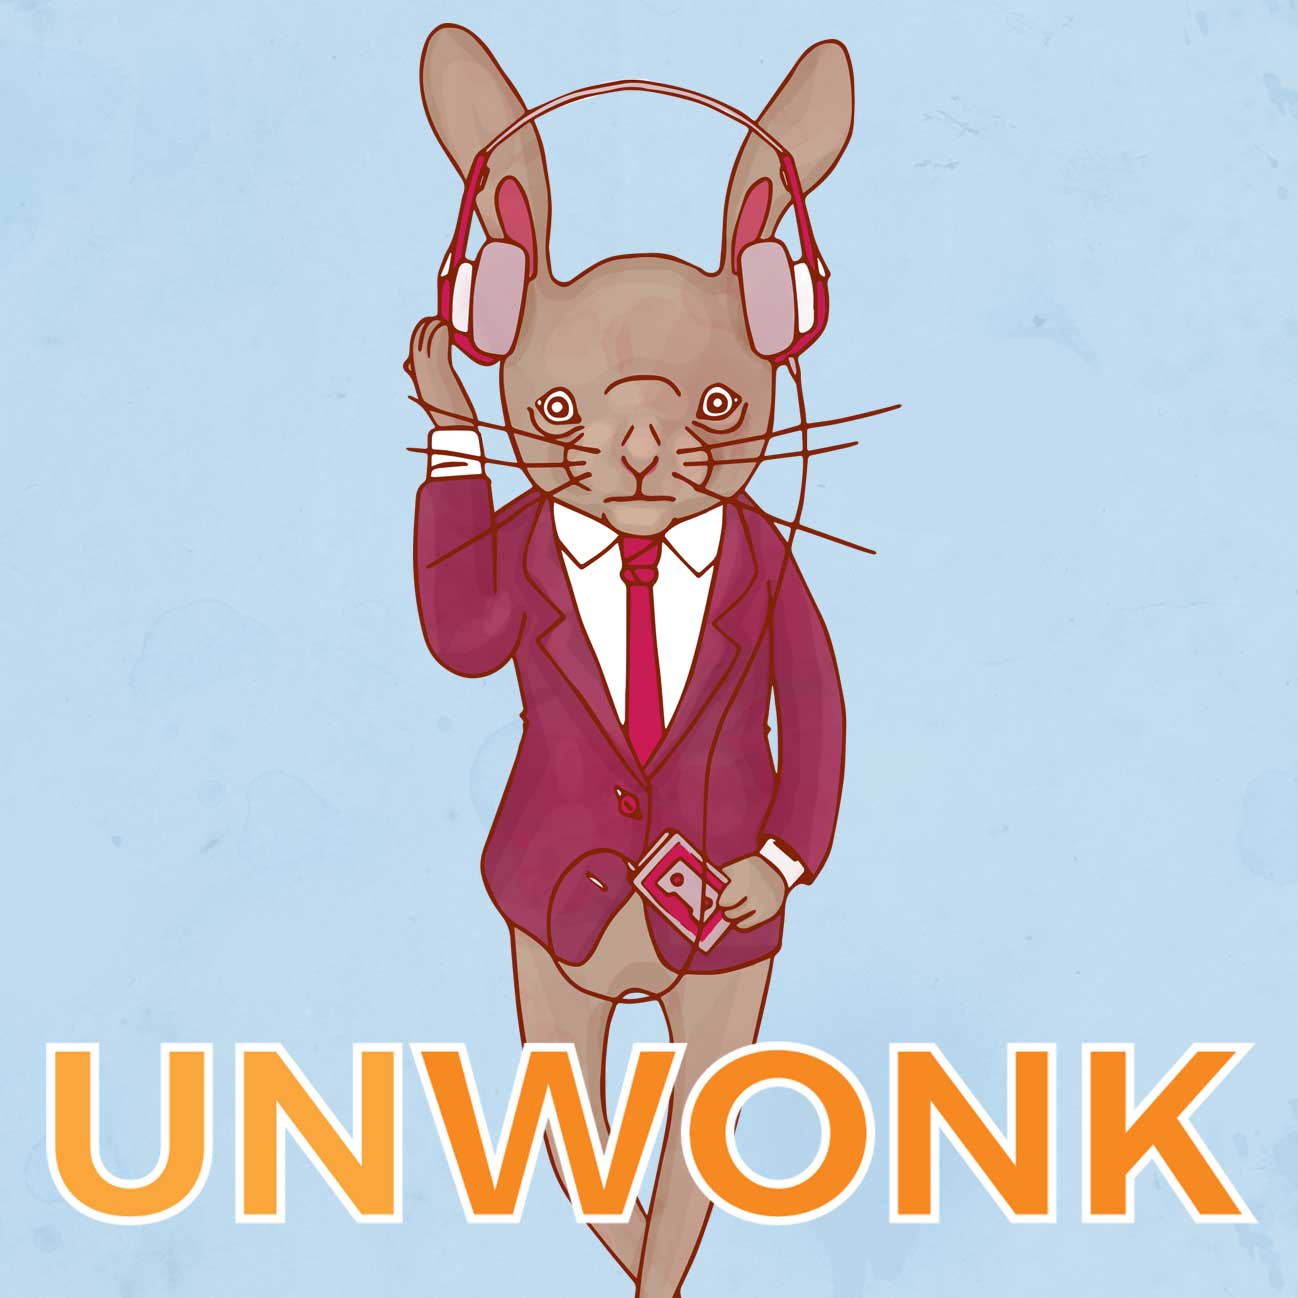 Unwonk